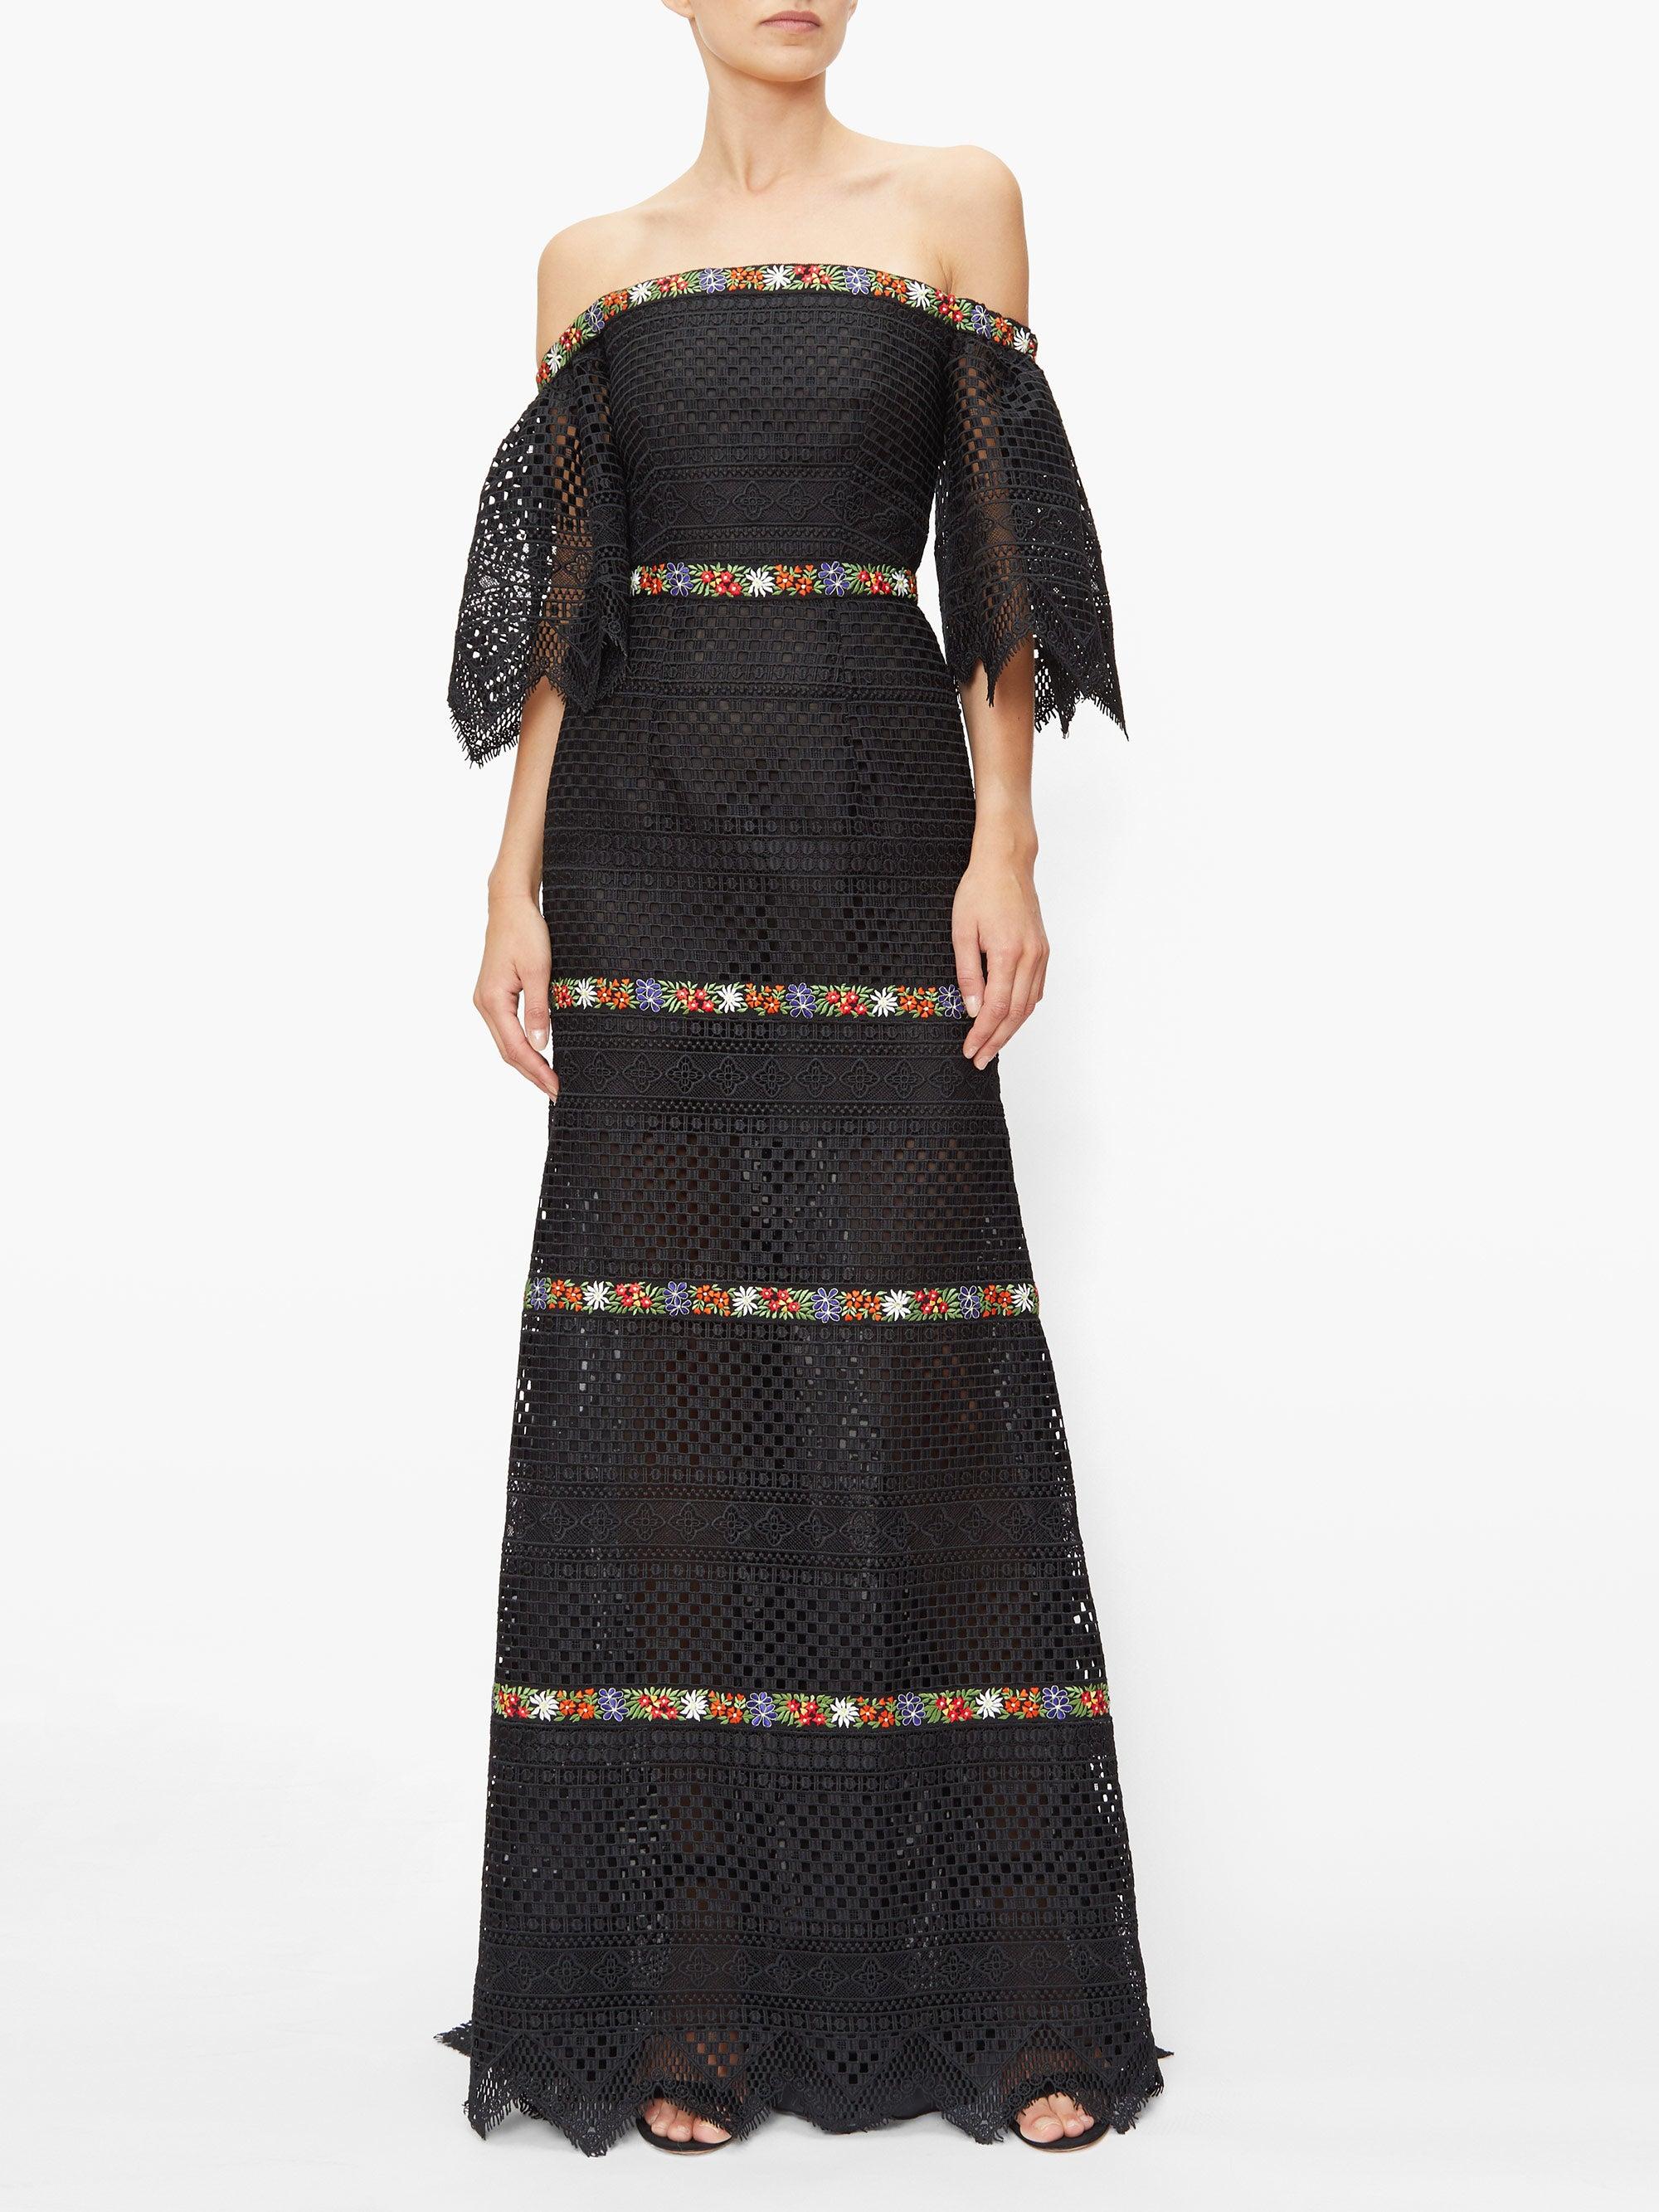 Carolina Herrera Floral-embroidered Guipure-lace Bardot Dress in Black |  Lyst